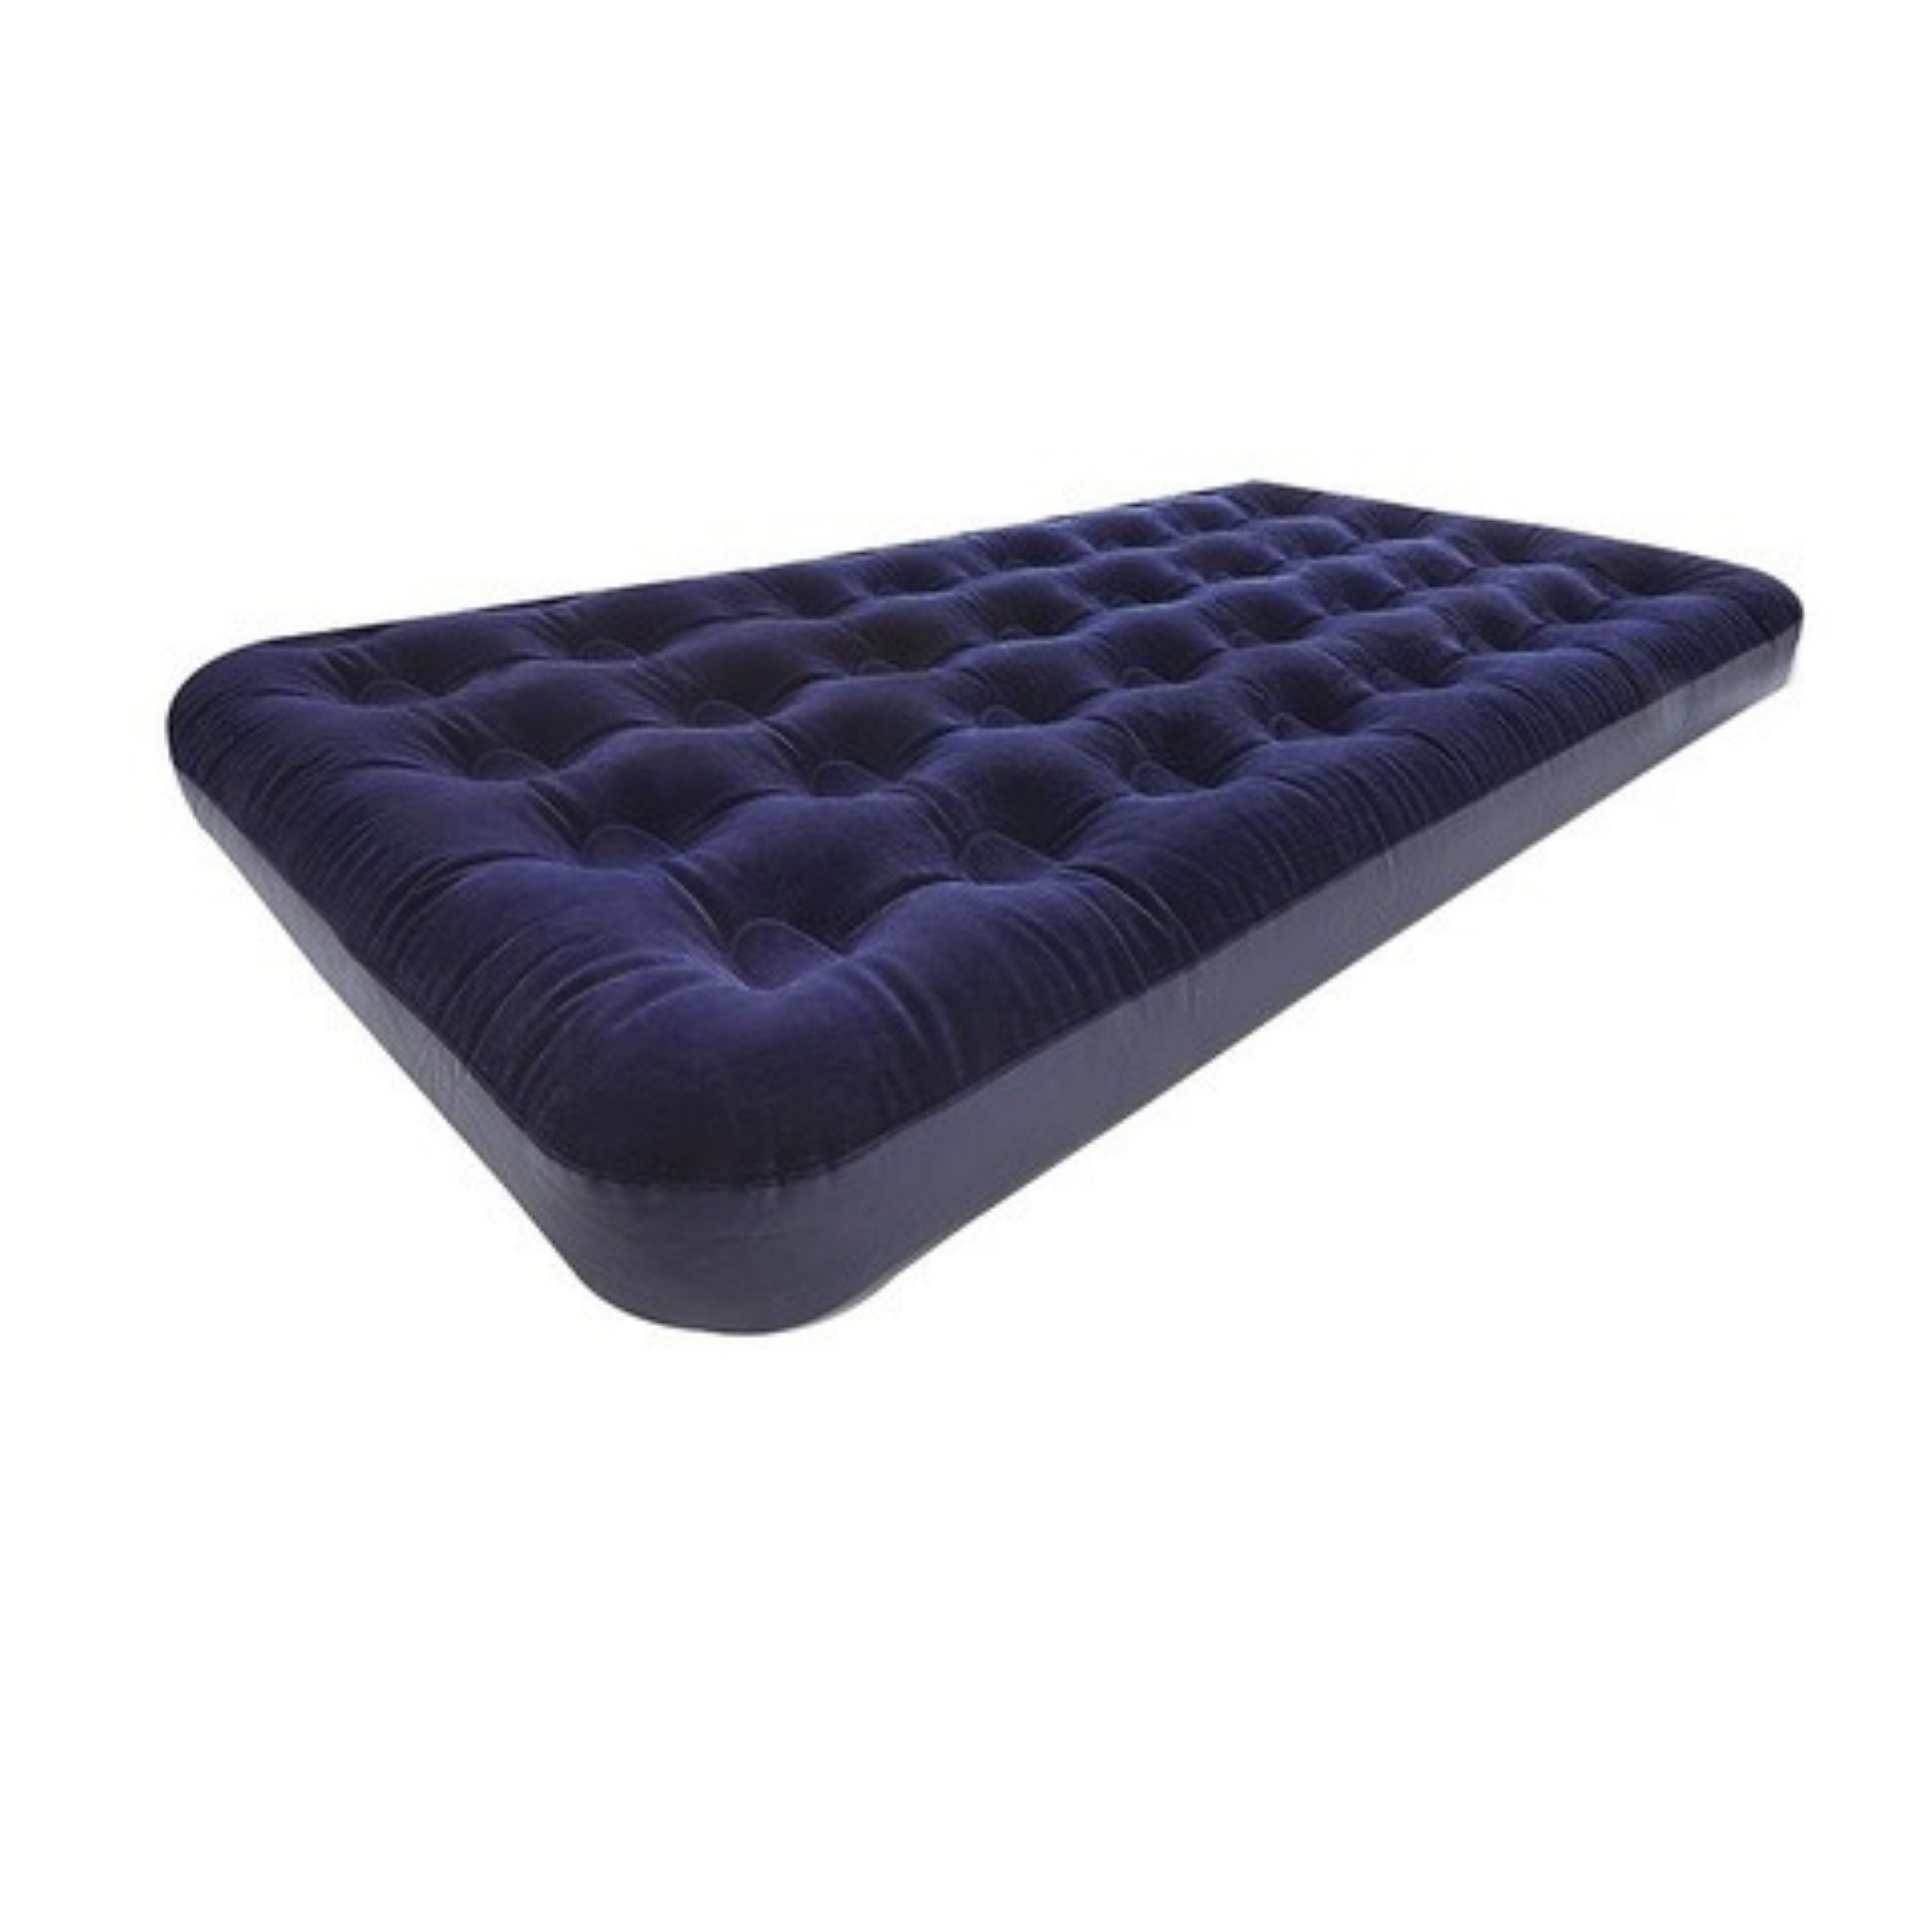 Matelas gonflable - double||Air mattress - double